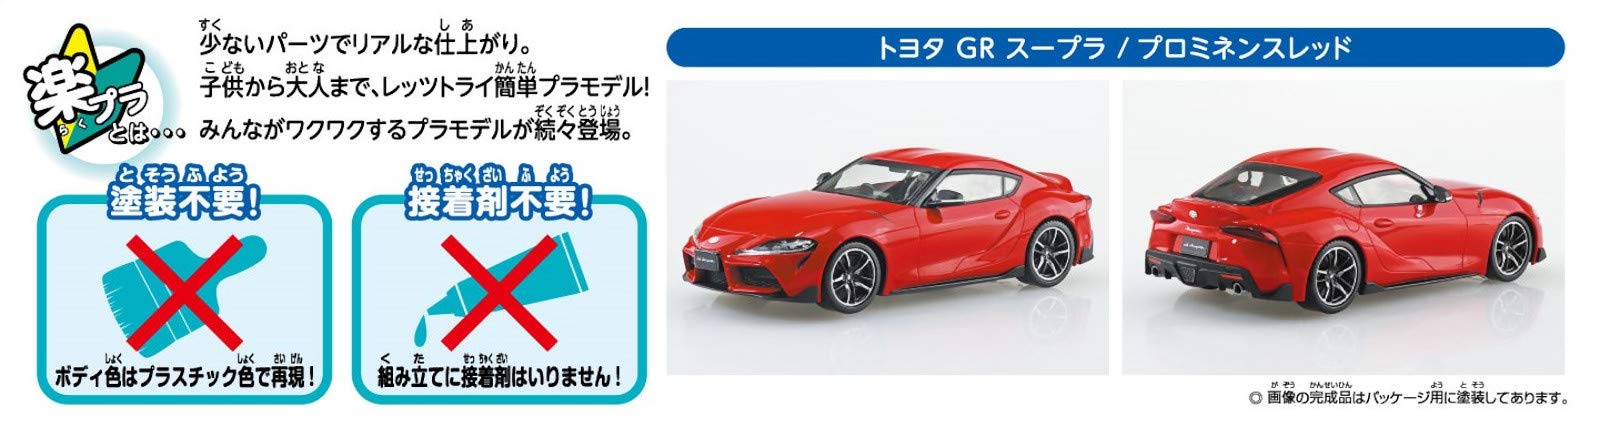 AOSHIMA The Snap Kit 1/32 Toyota Gr Supra Prominence Rouge Plastique Modèle